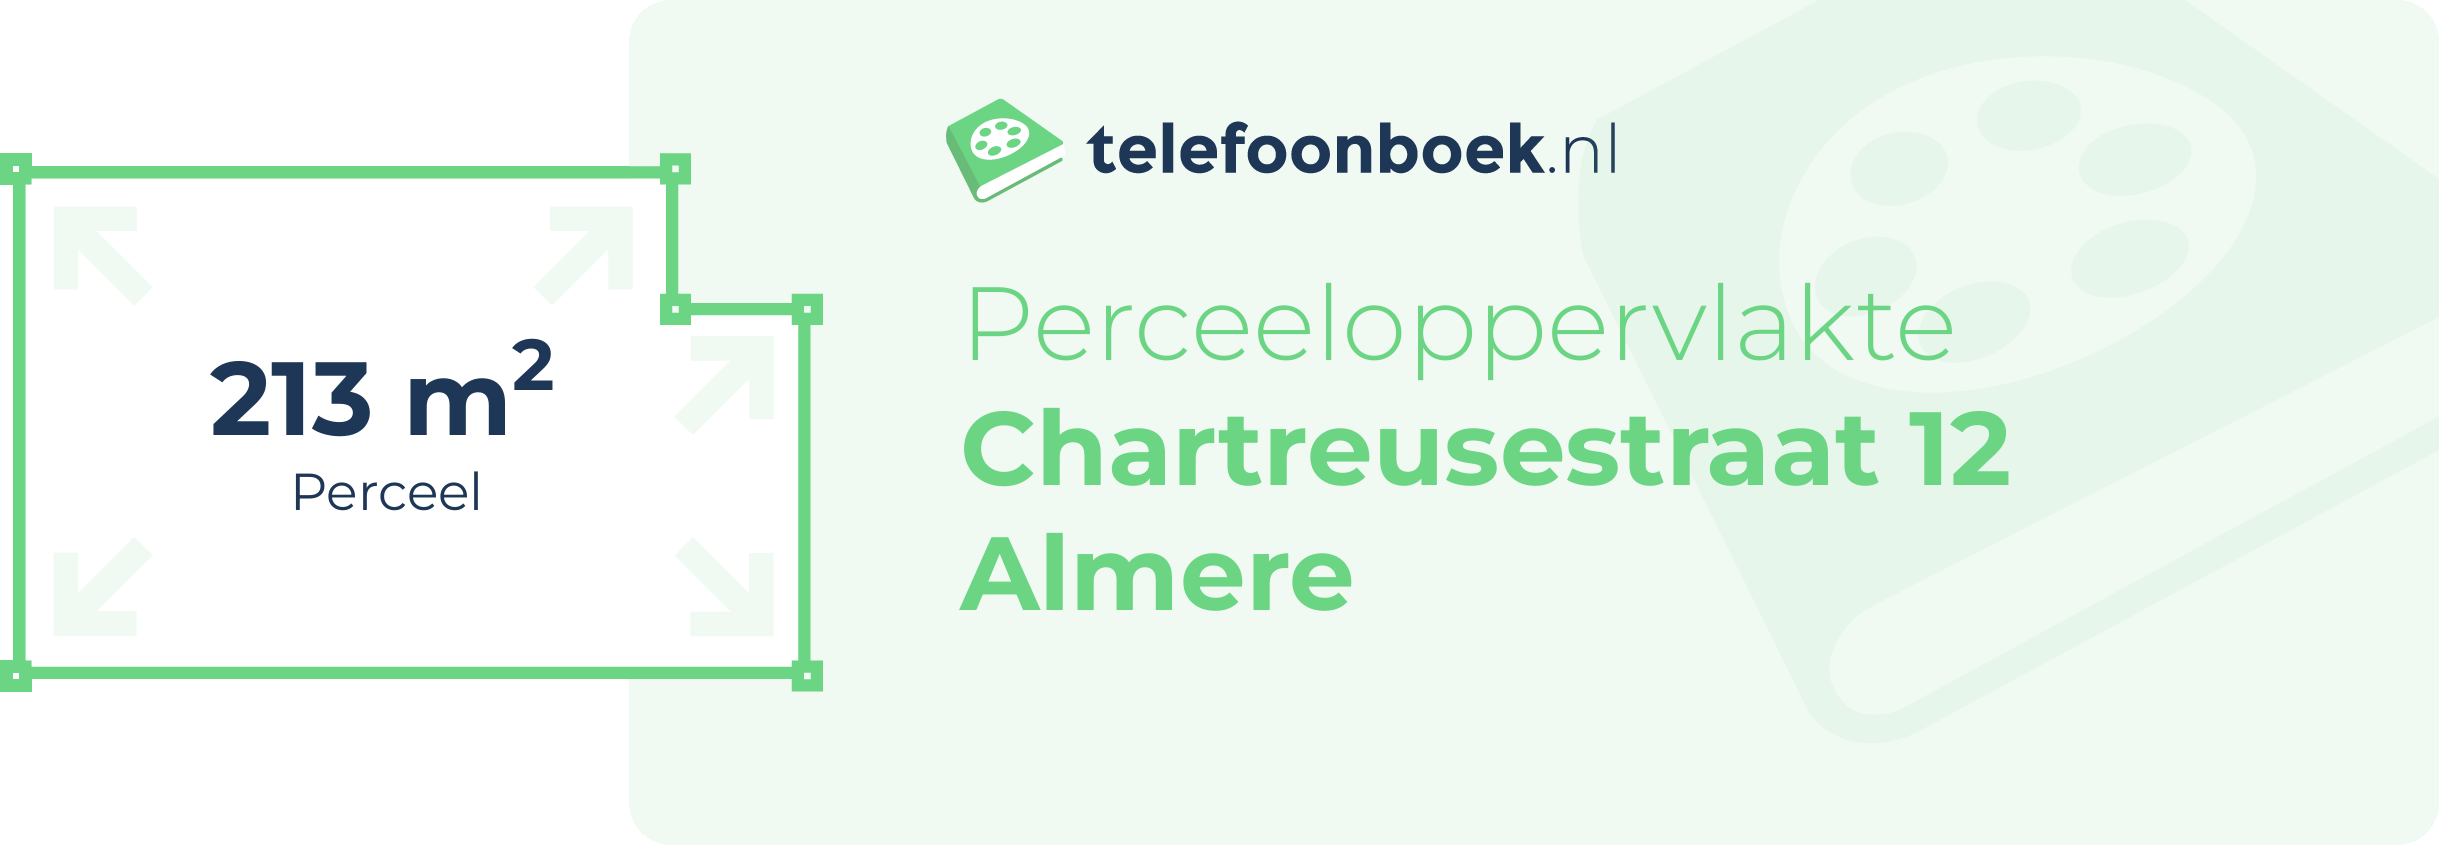 Perceeloppervlakte Chartreusestraat 12 Almere